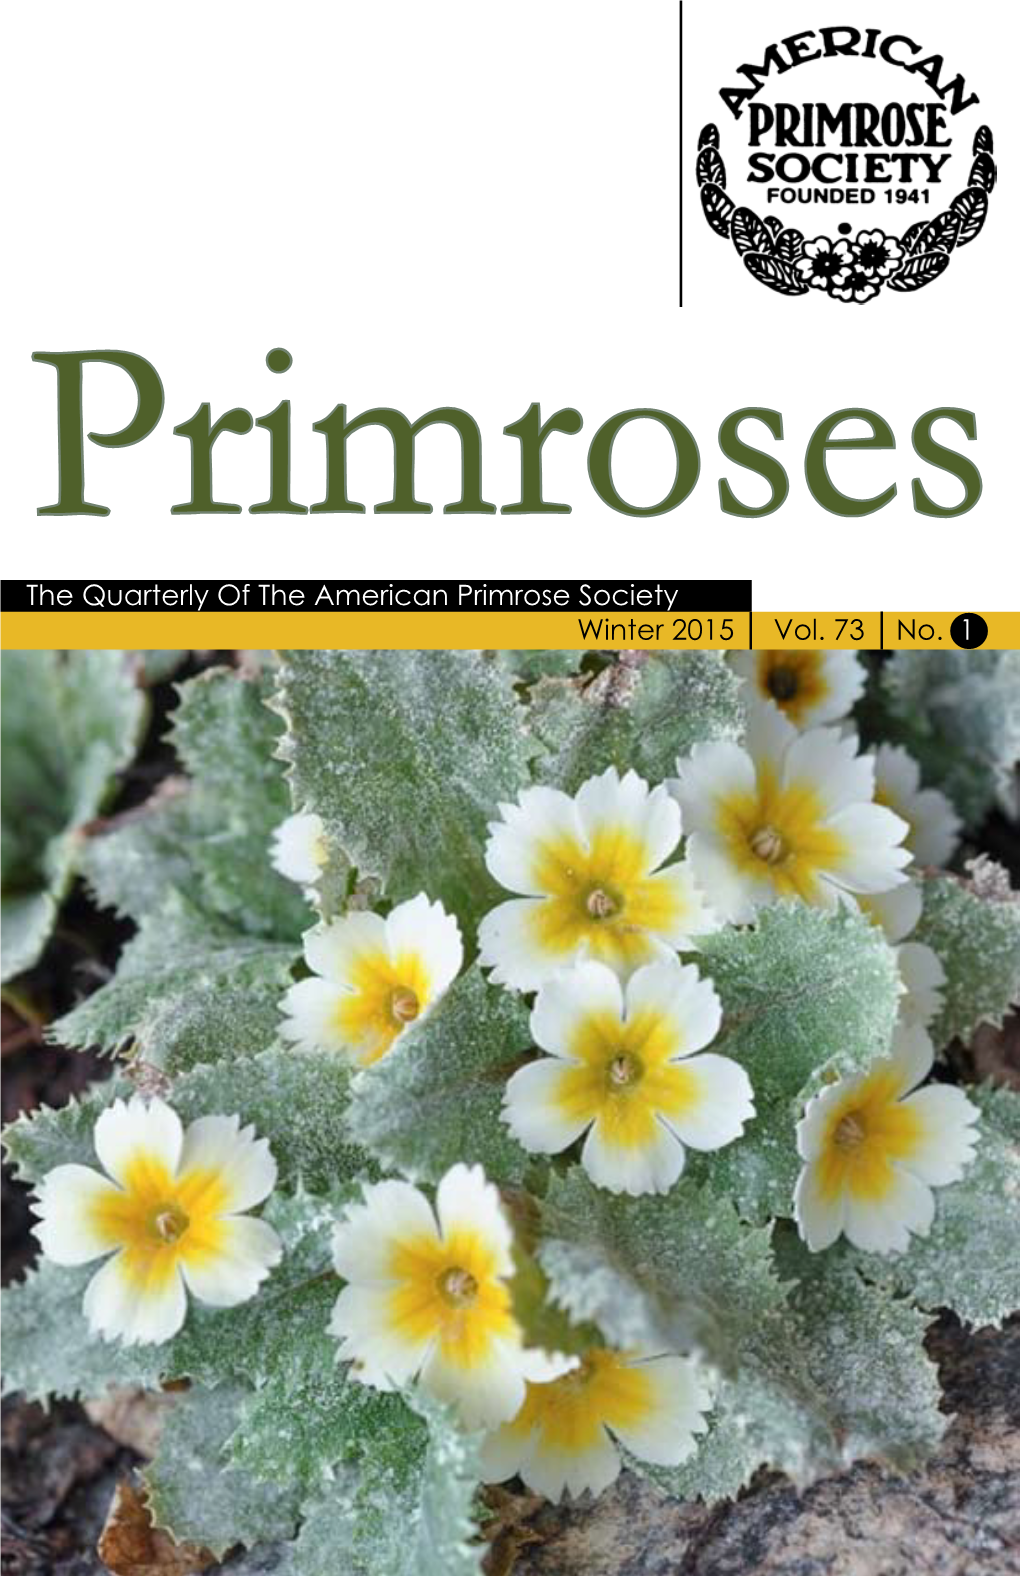 The Quarterly of the American Primrose Society Winter 2015 Vol